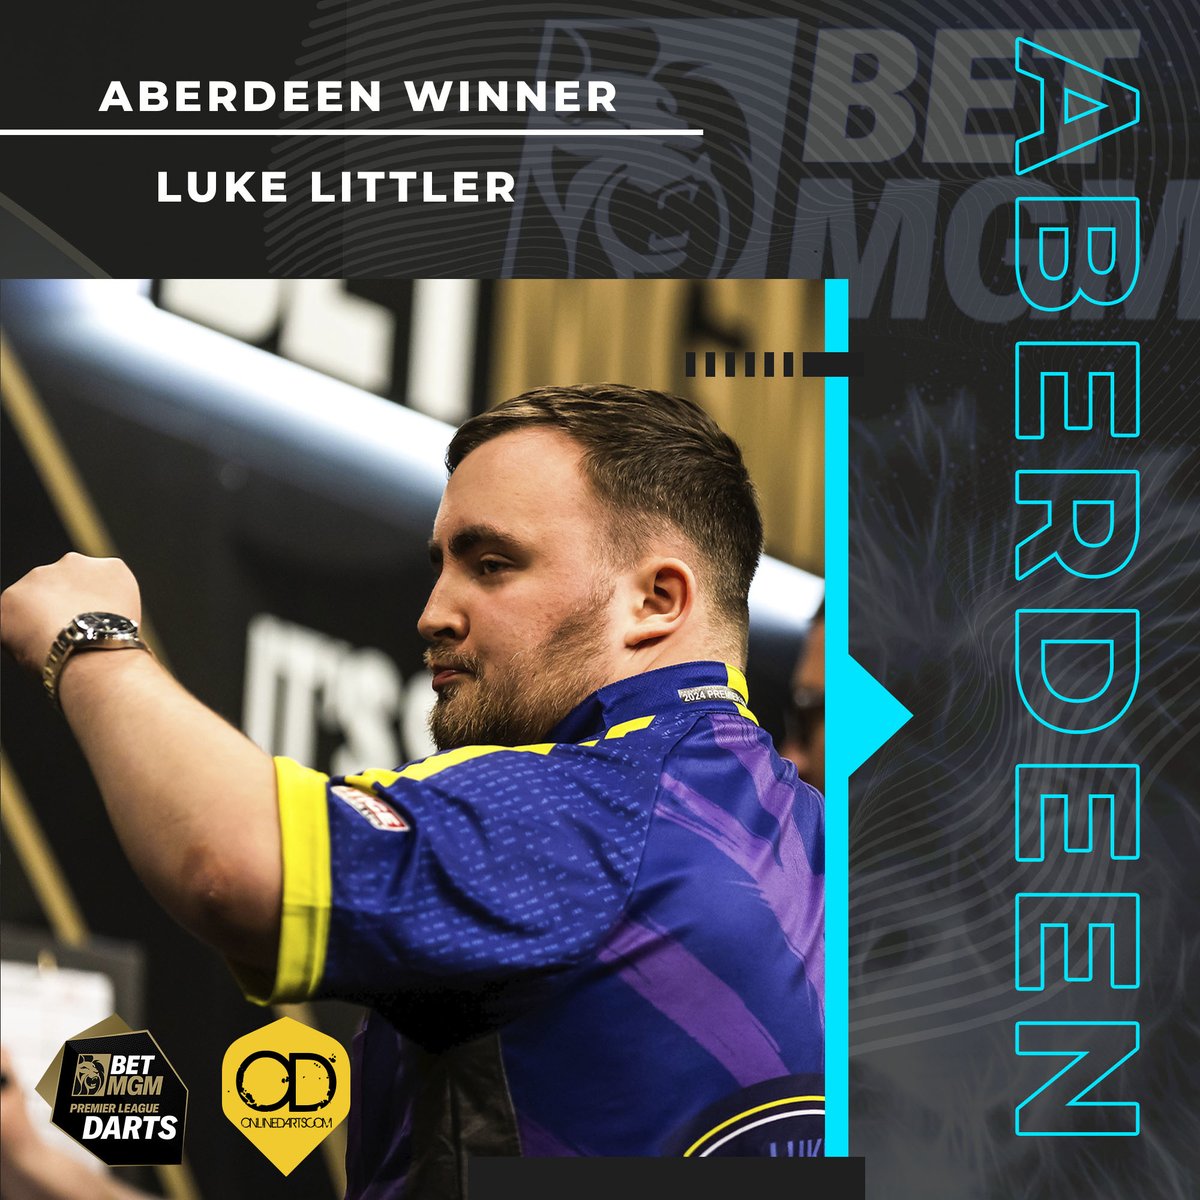 Littler does it again 🏆🏆🏆🏆 ☢️ Luke Littler wins his 4th Premier League night in Aberdeen as the superstar dominates the Premier League 🔥🔥